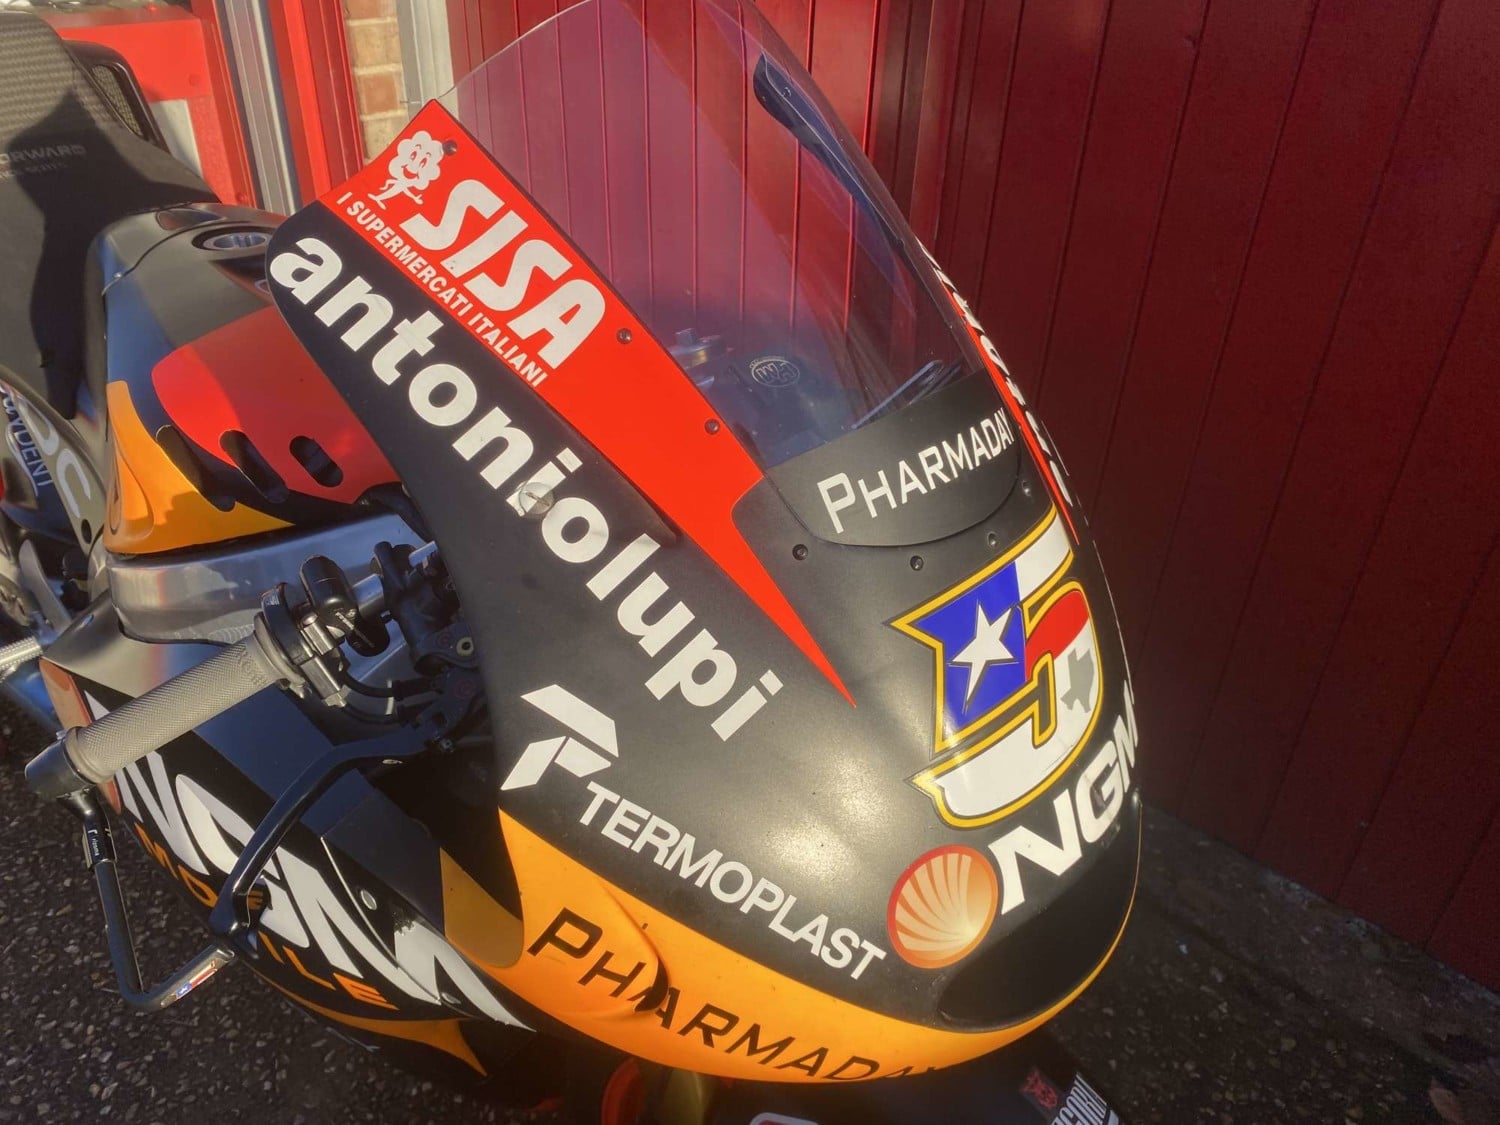 Colin Edwards’ Kawasaki MotoGP racer bortauktioneres 18. februar